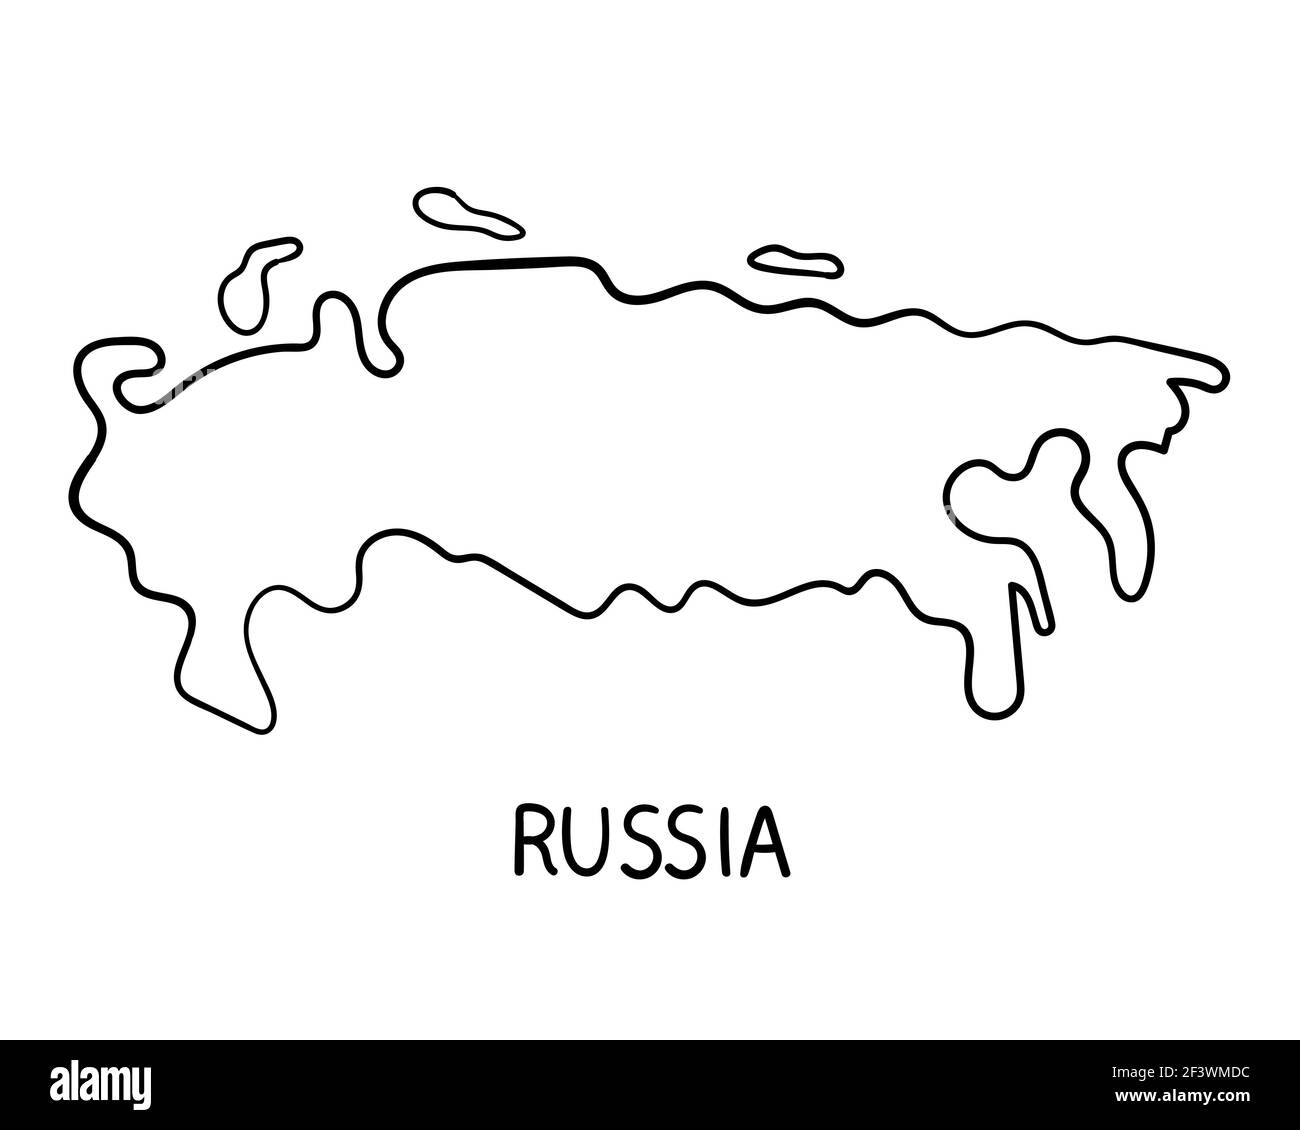 Hand drawn Russia map illustration Stock Photo